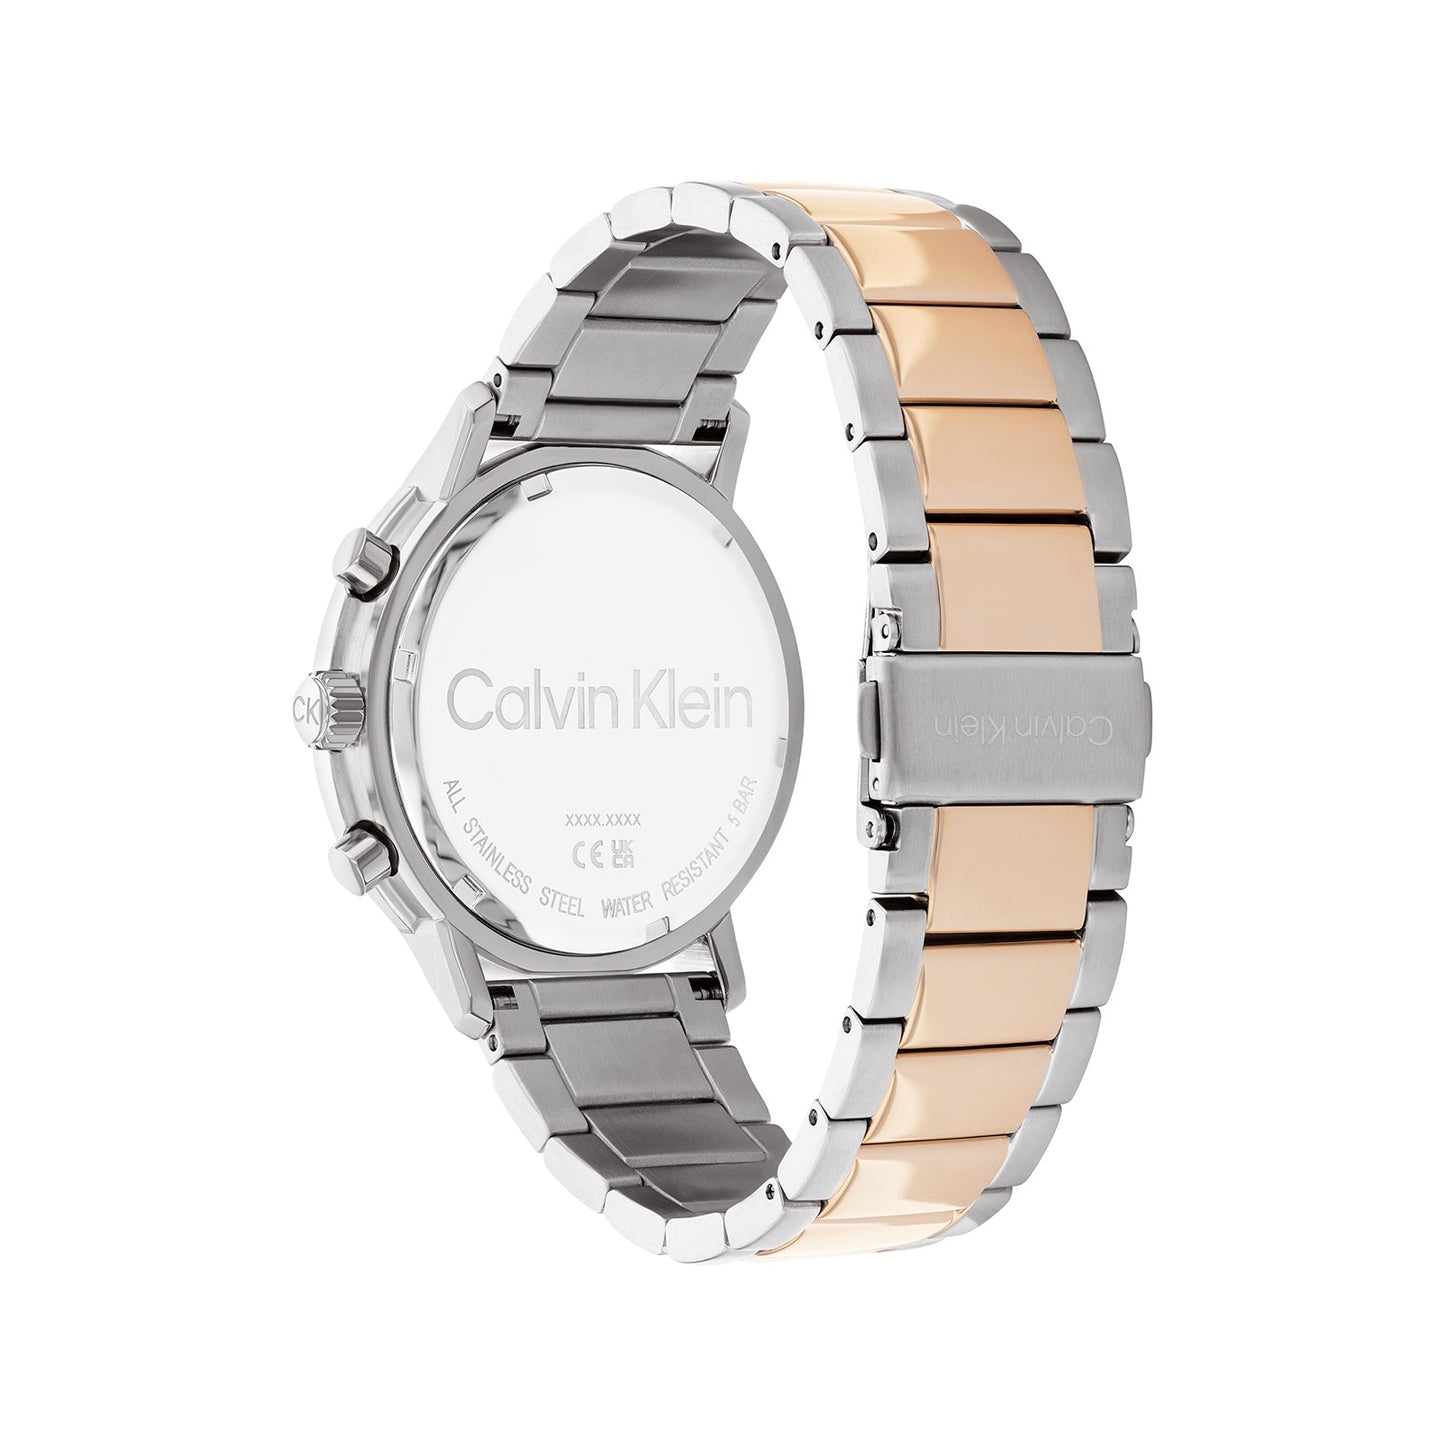 Calvin Klein 25200064 Men's Two-Tone Watch